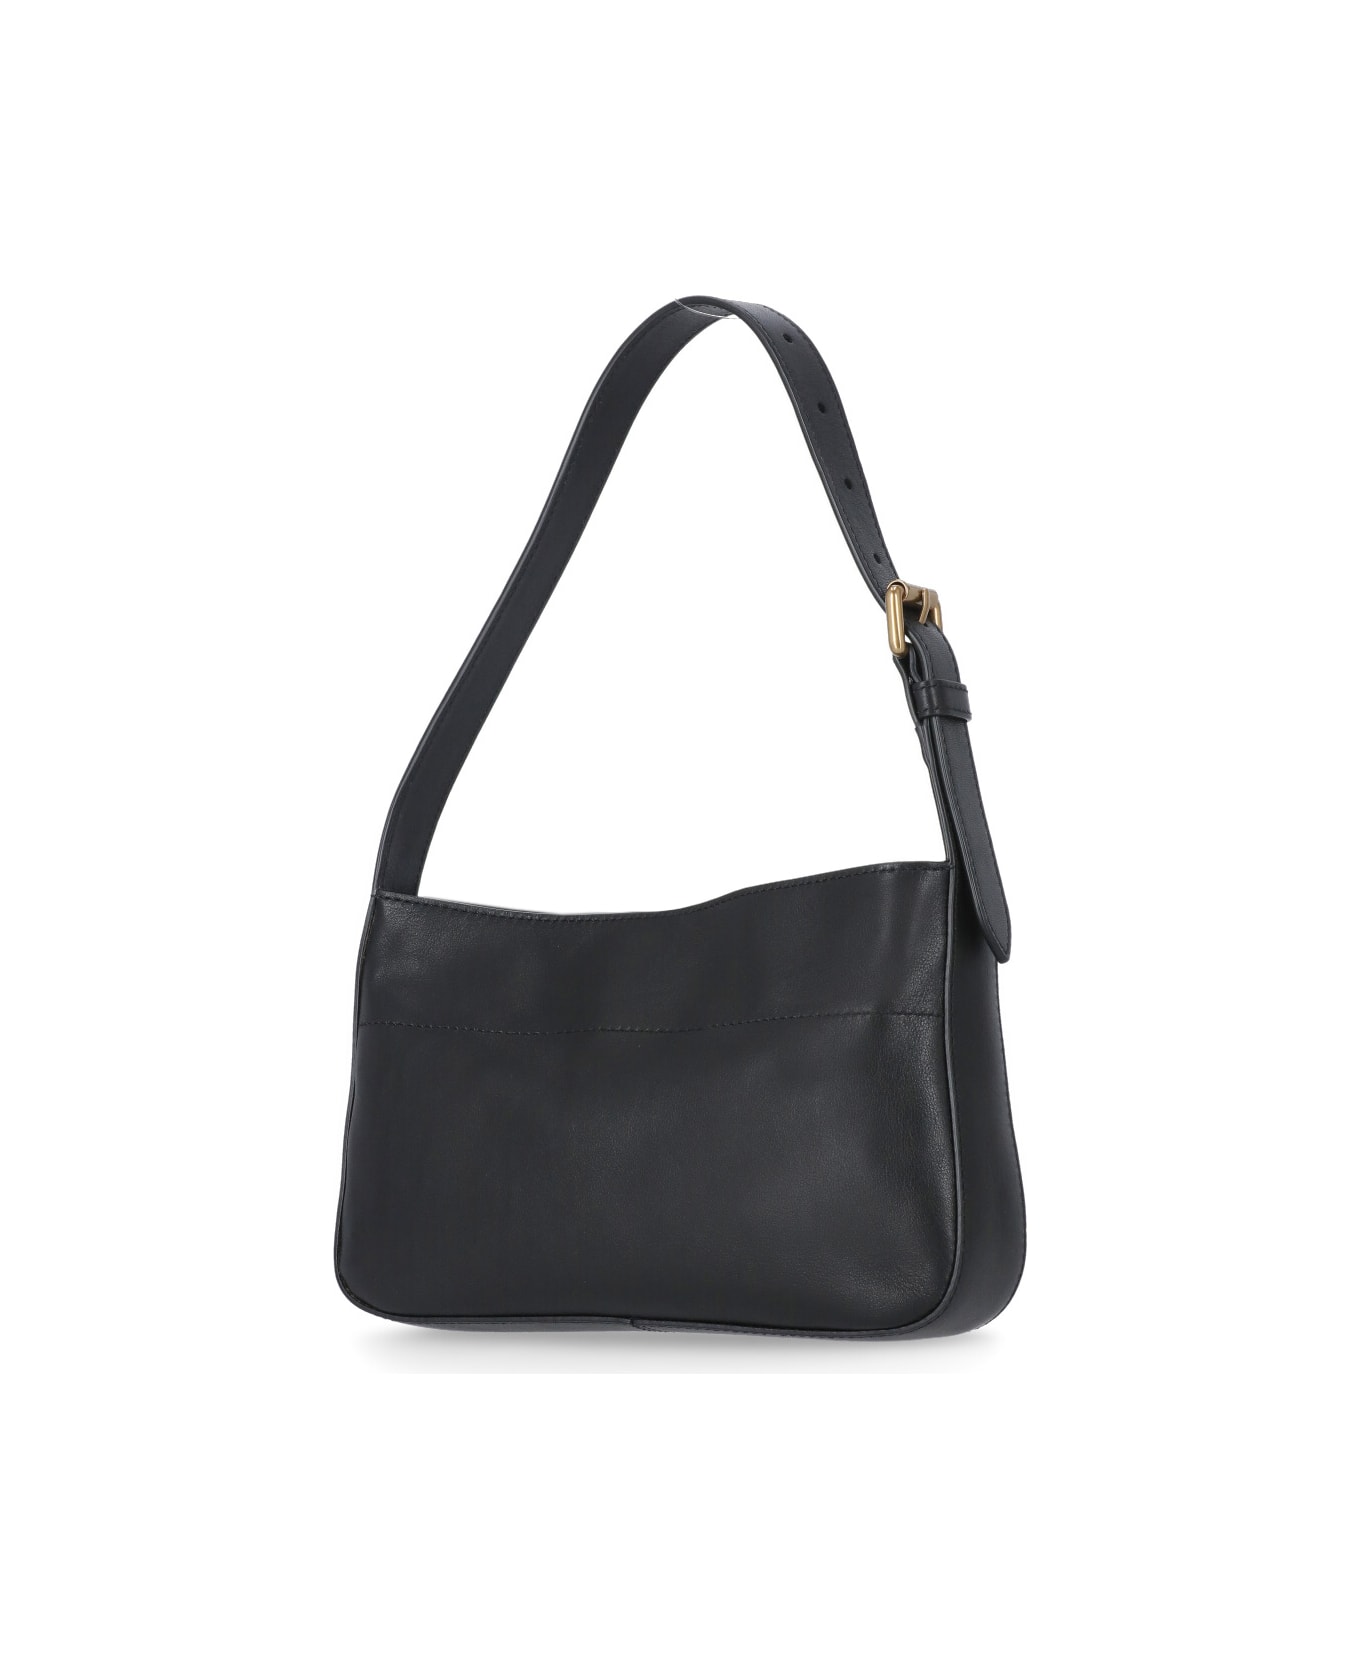 Moschino Shoulder Bag With Logo - Black トートバッグ